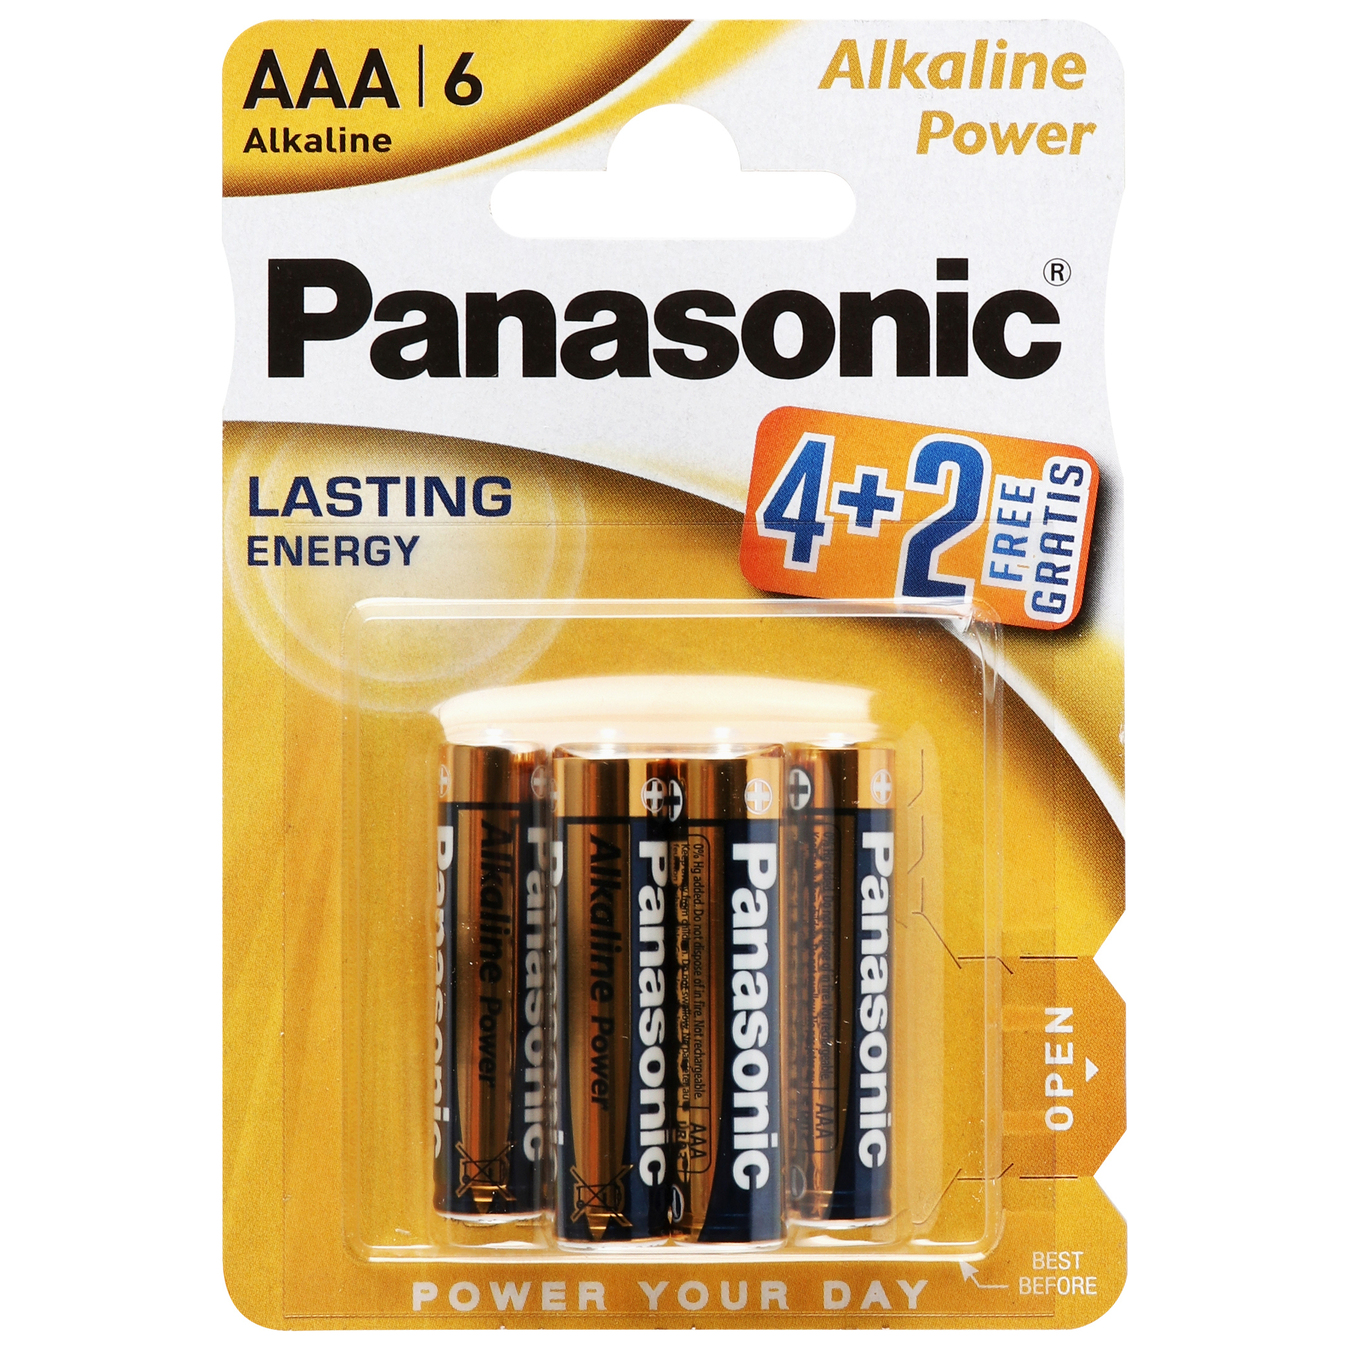 Alkaline battery Panasonic Alkaline Power AAA 6 pcs